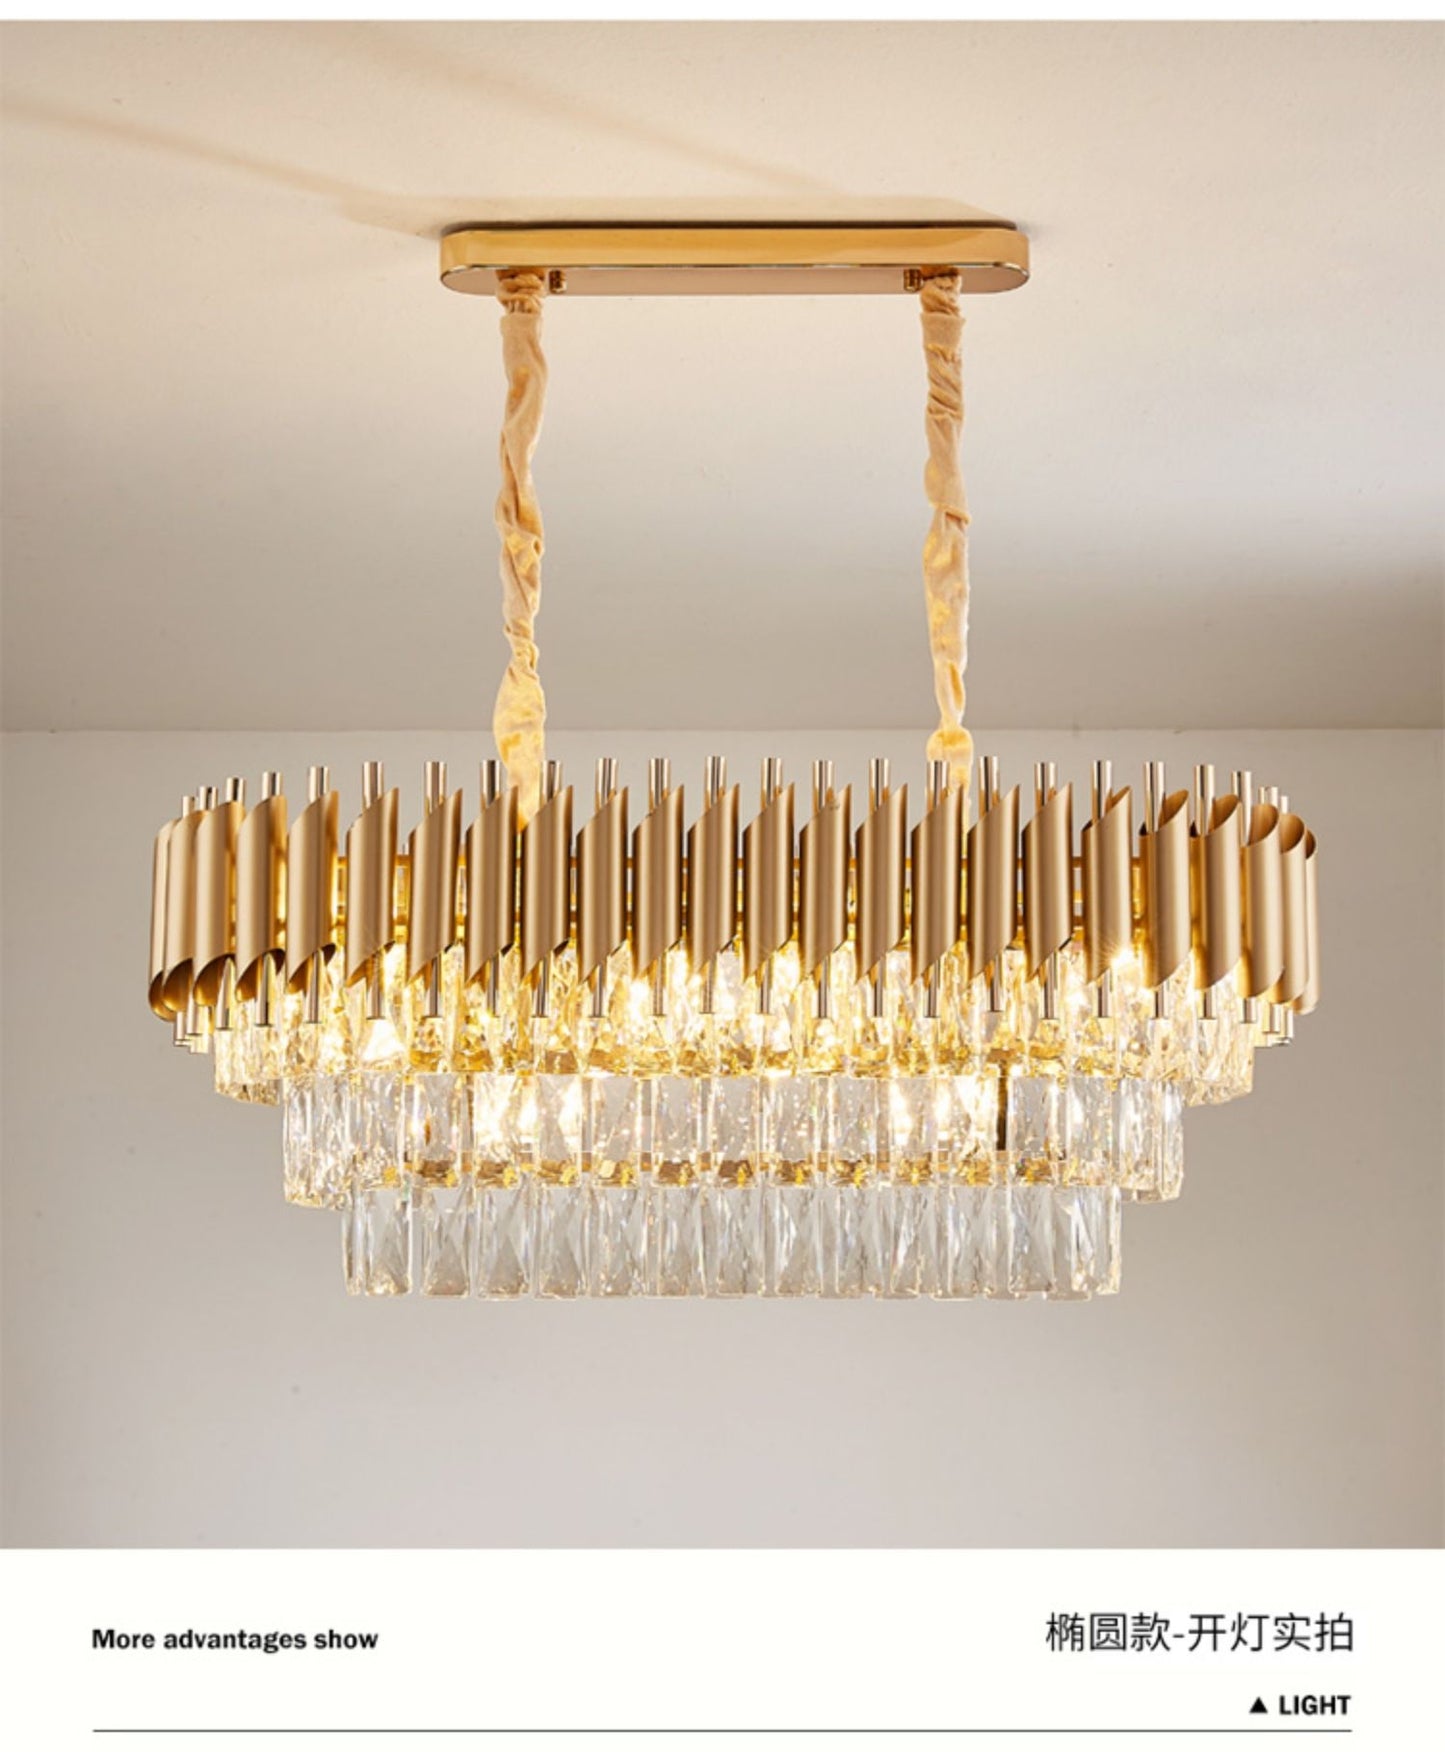 Light luxury crystal chandelier golden oval restaurant bar lamp bedroom luxury simple atmosphere living room lamp black